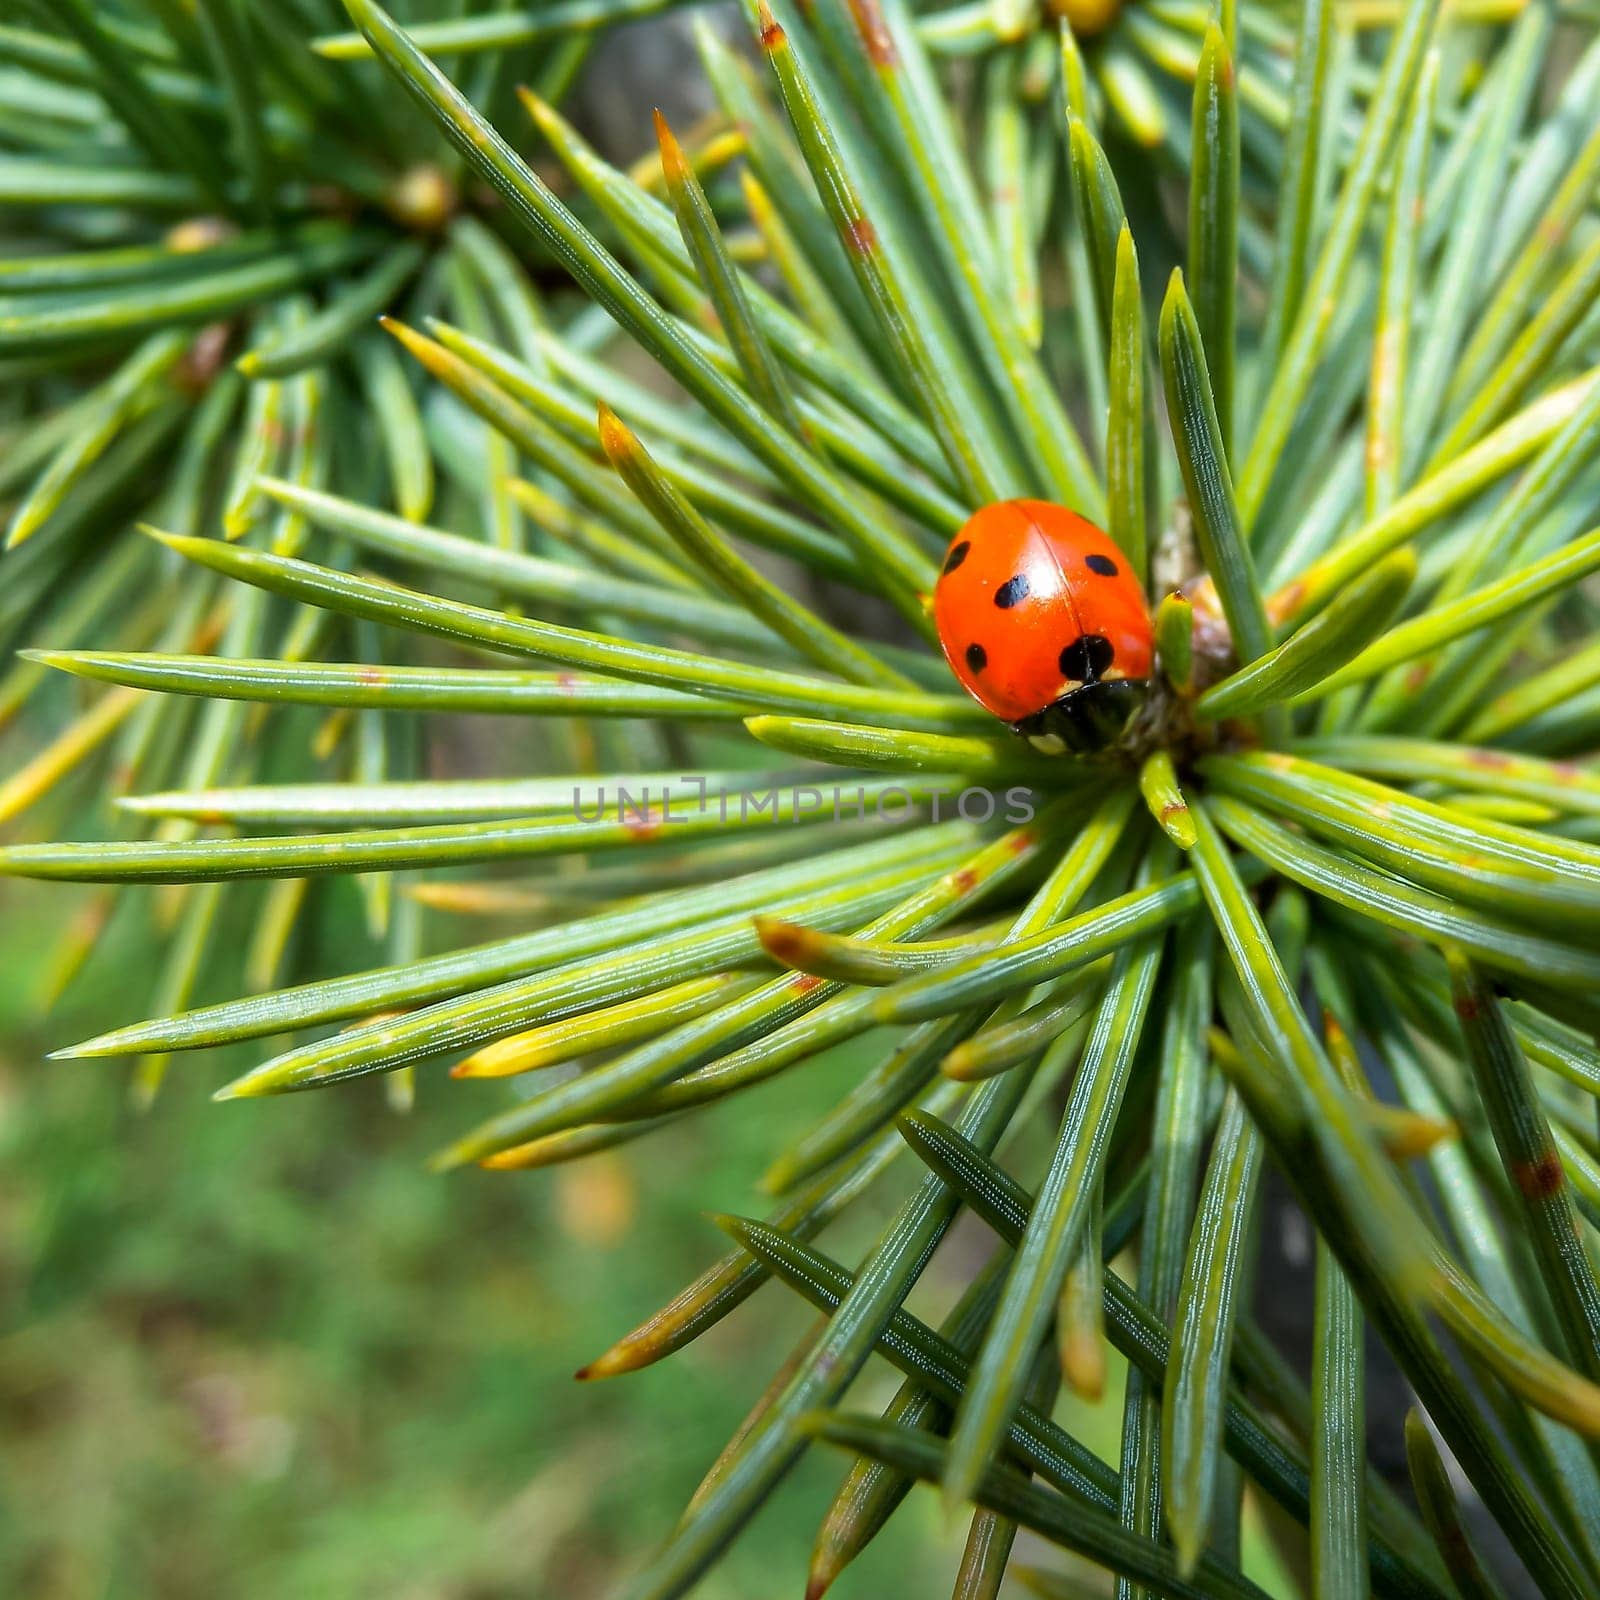 Lady beetles (Coccinella septempunctata), beetle sits among the needles of a coniferous plant